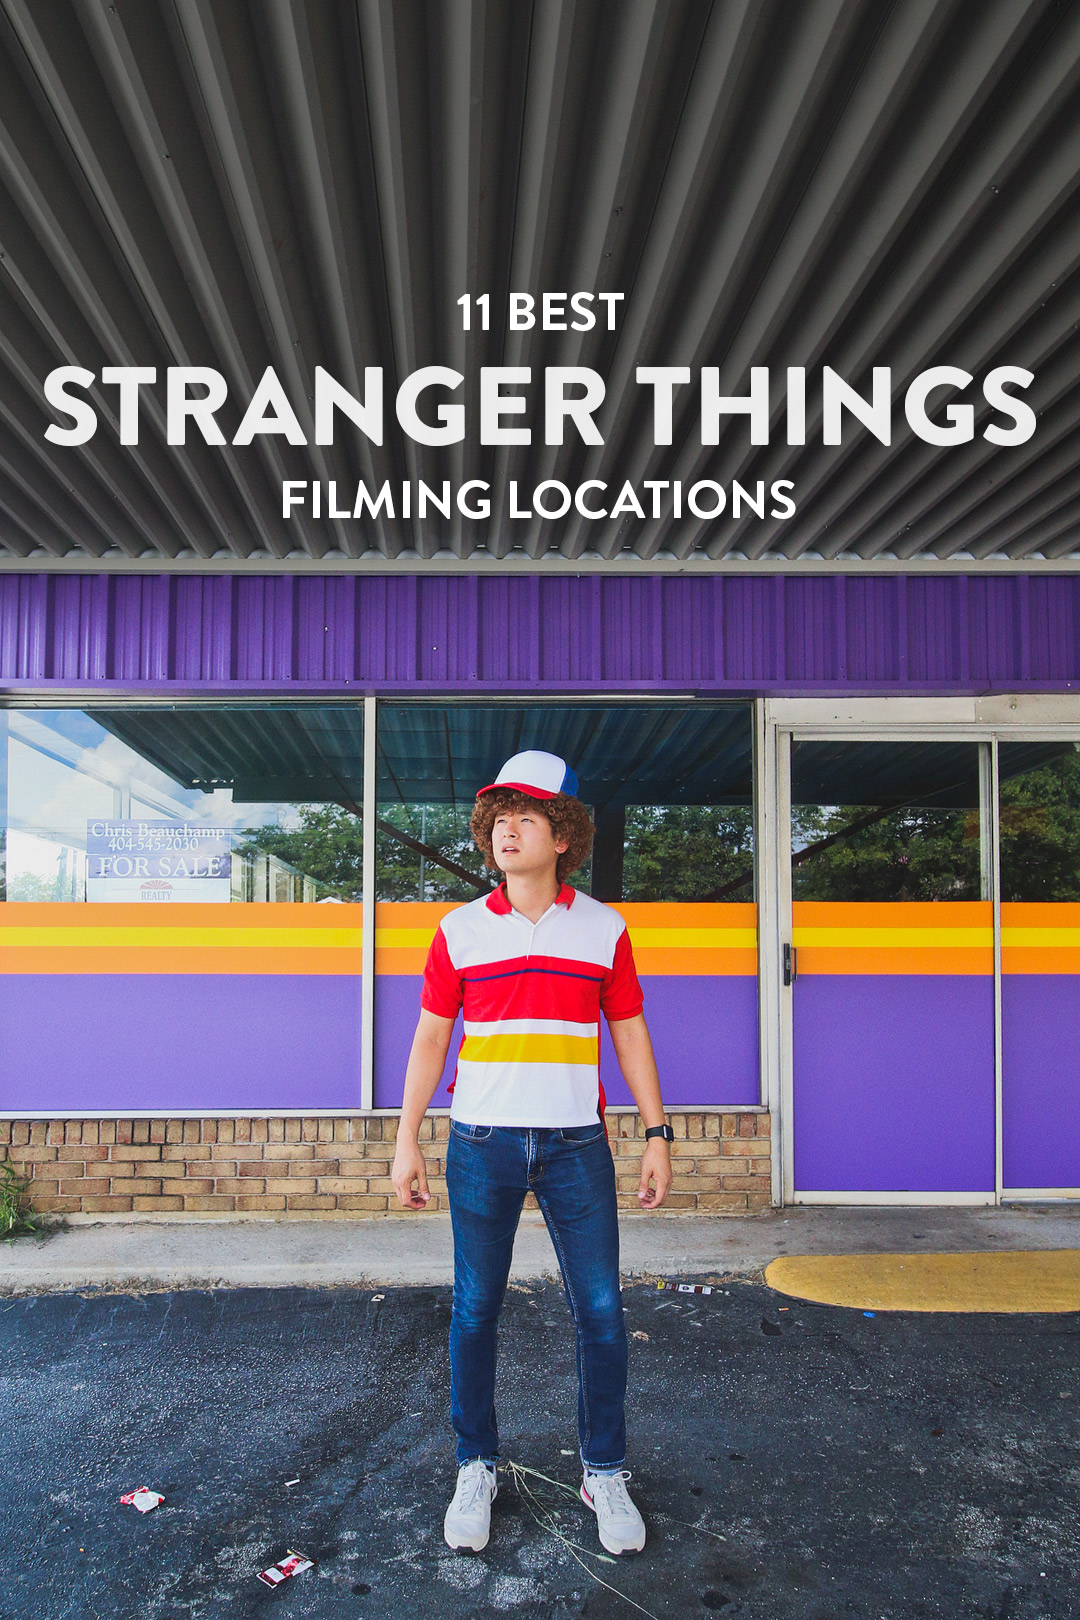 11 Best Stranger Things Filming Locations You Should Visit Now // Local Adventurer #atlanta #georgia #usa #travel #tvshows #filmlocation #strangerthings